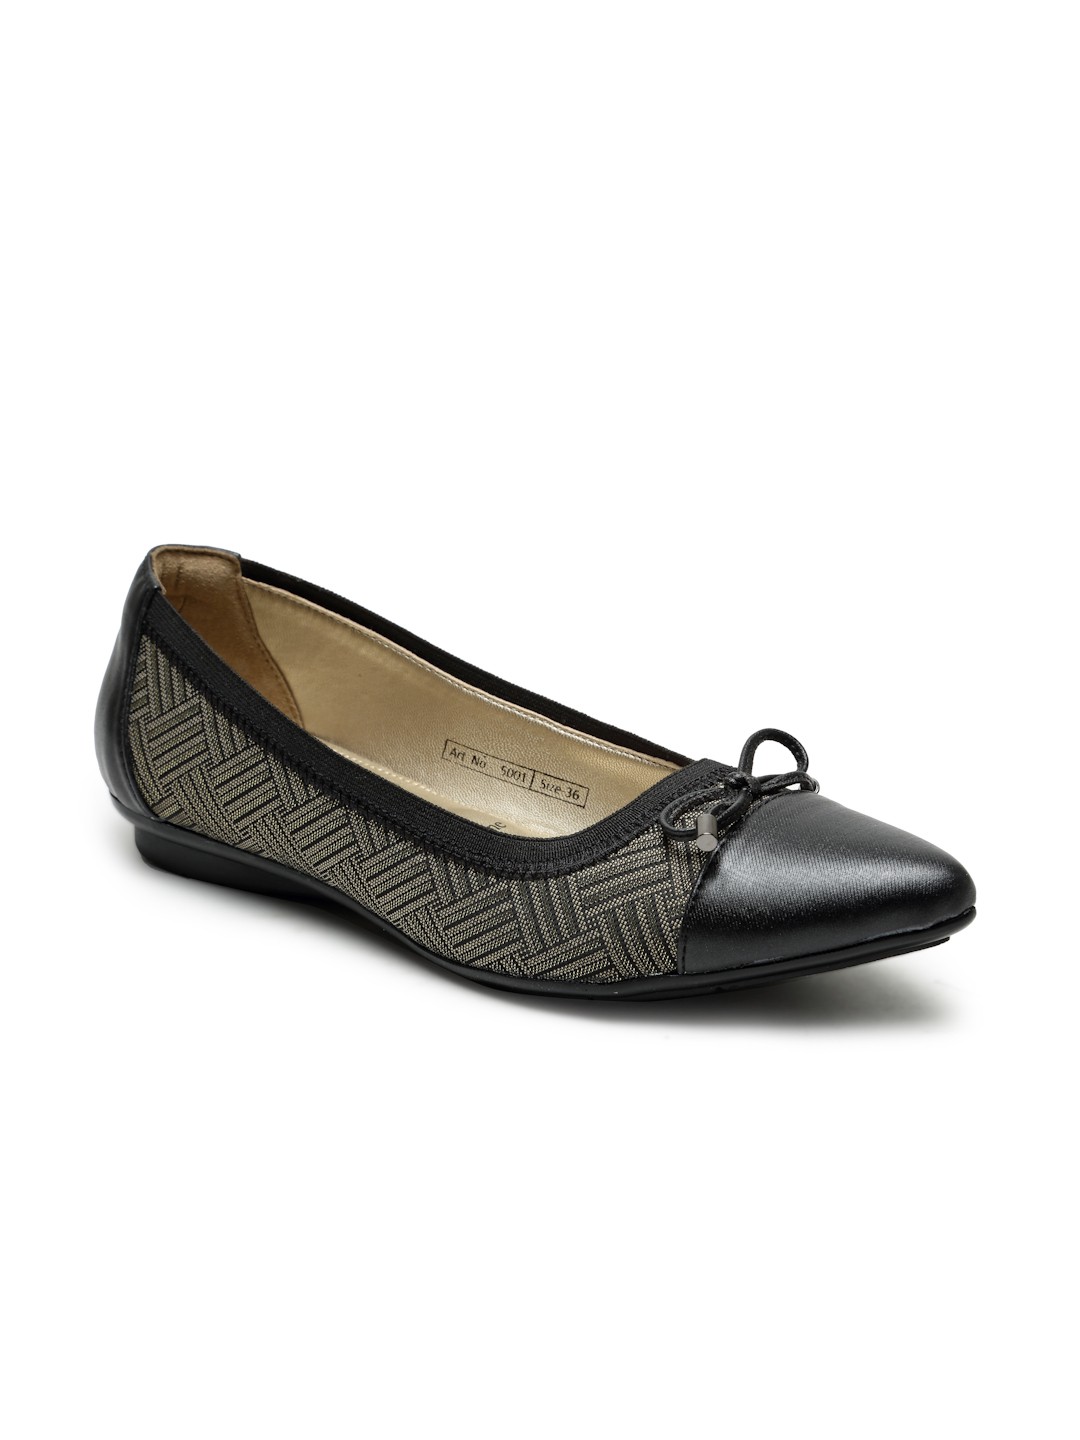 Buy Von Wellx Germany Comfort Women's Black Casual Shoes Lisa Online in Riyadh